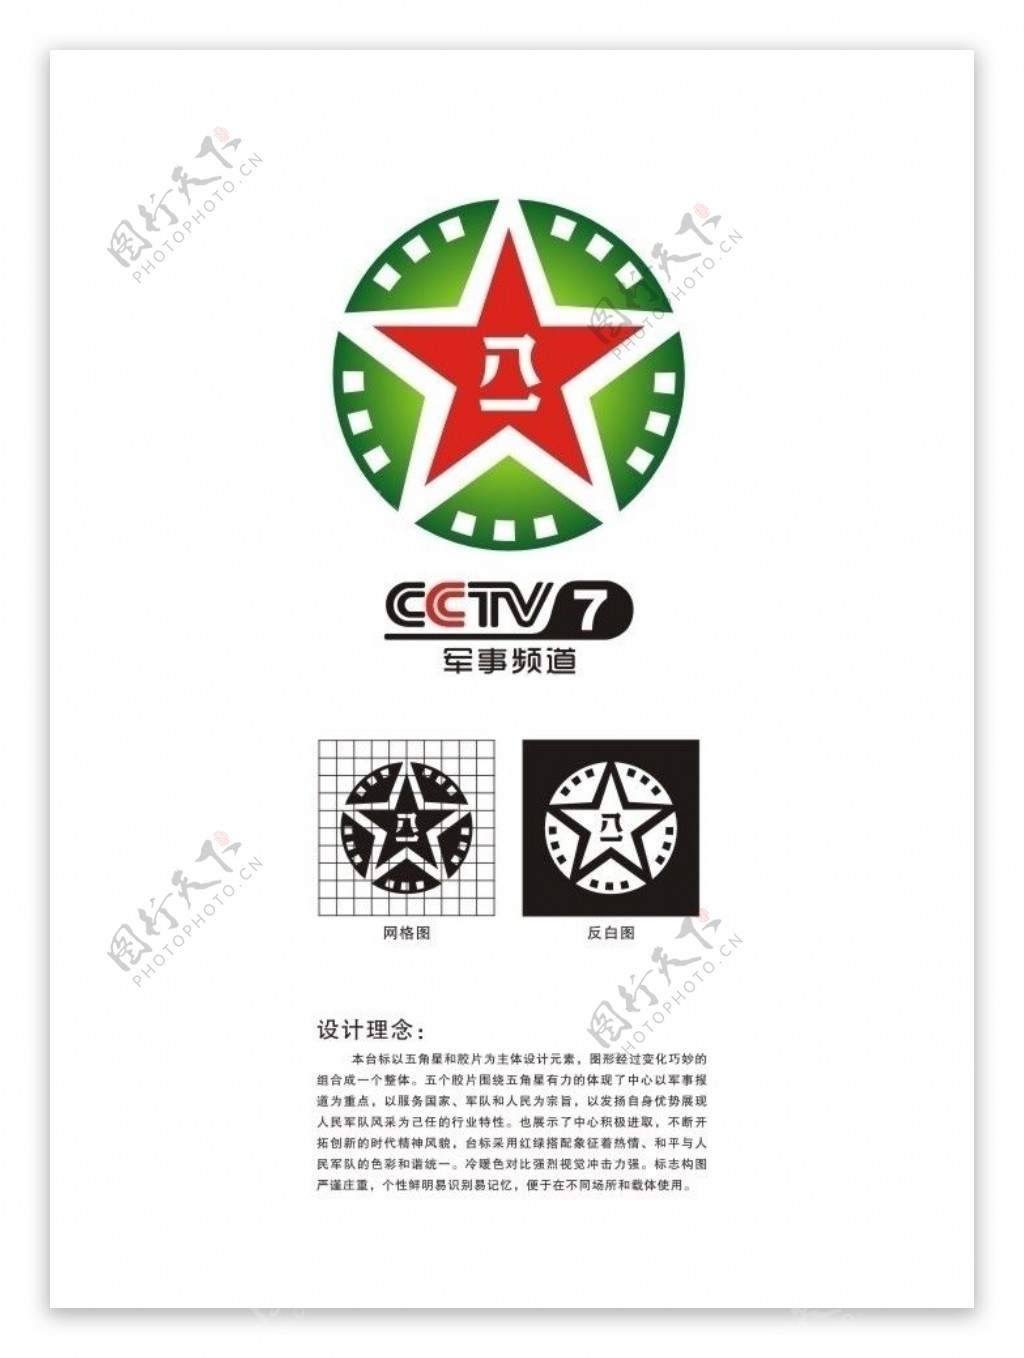 CCTV7军事频道logo图片